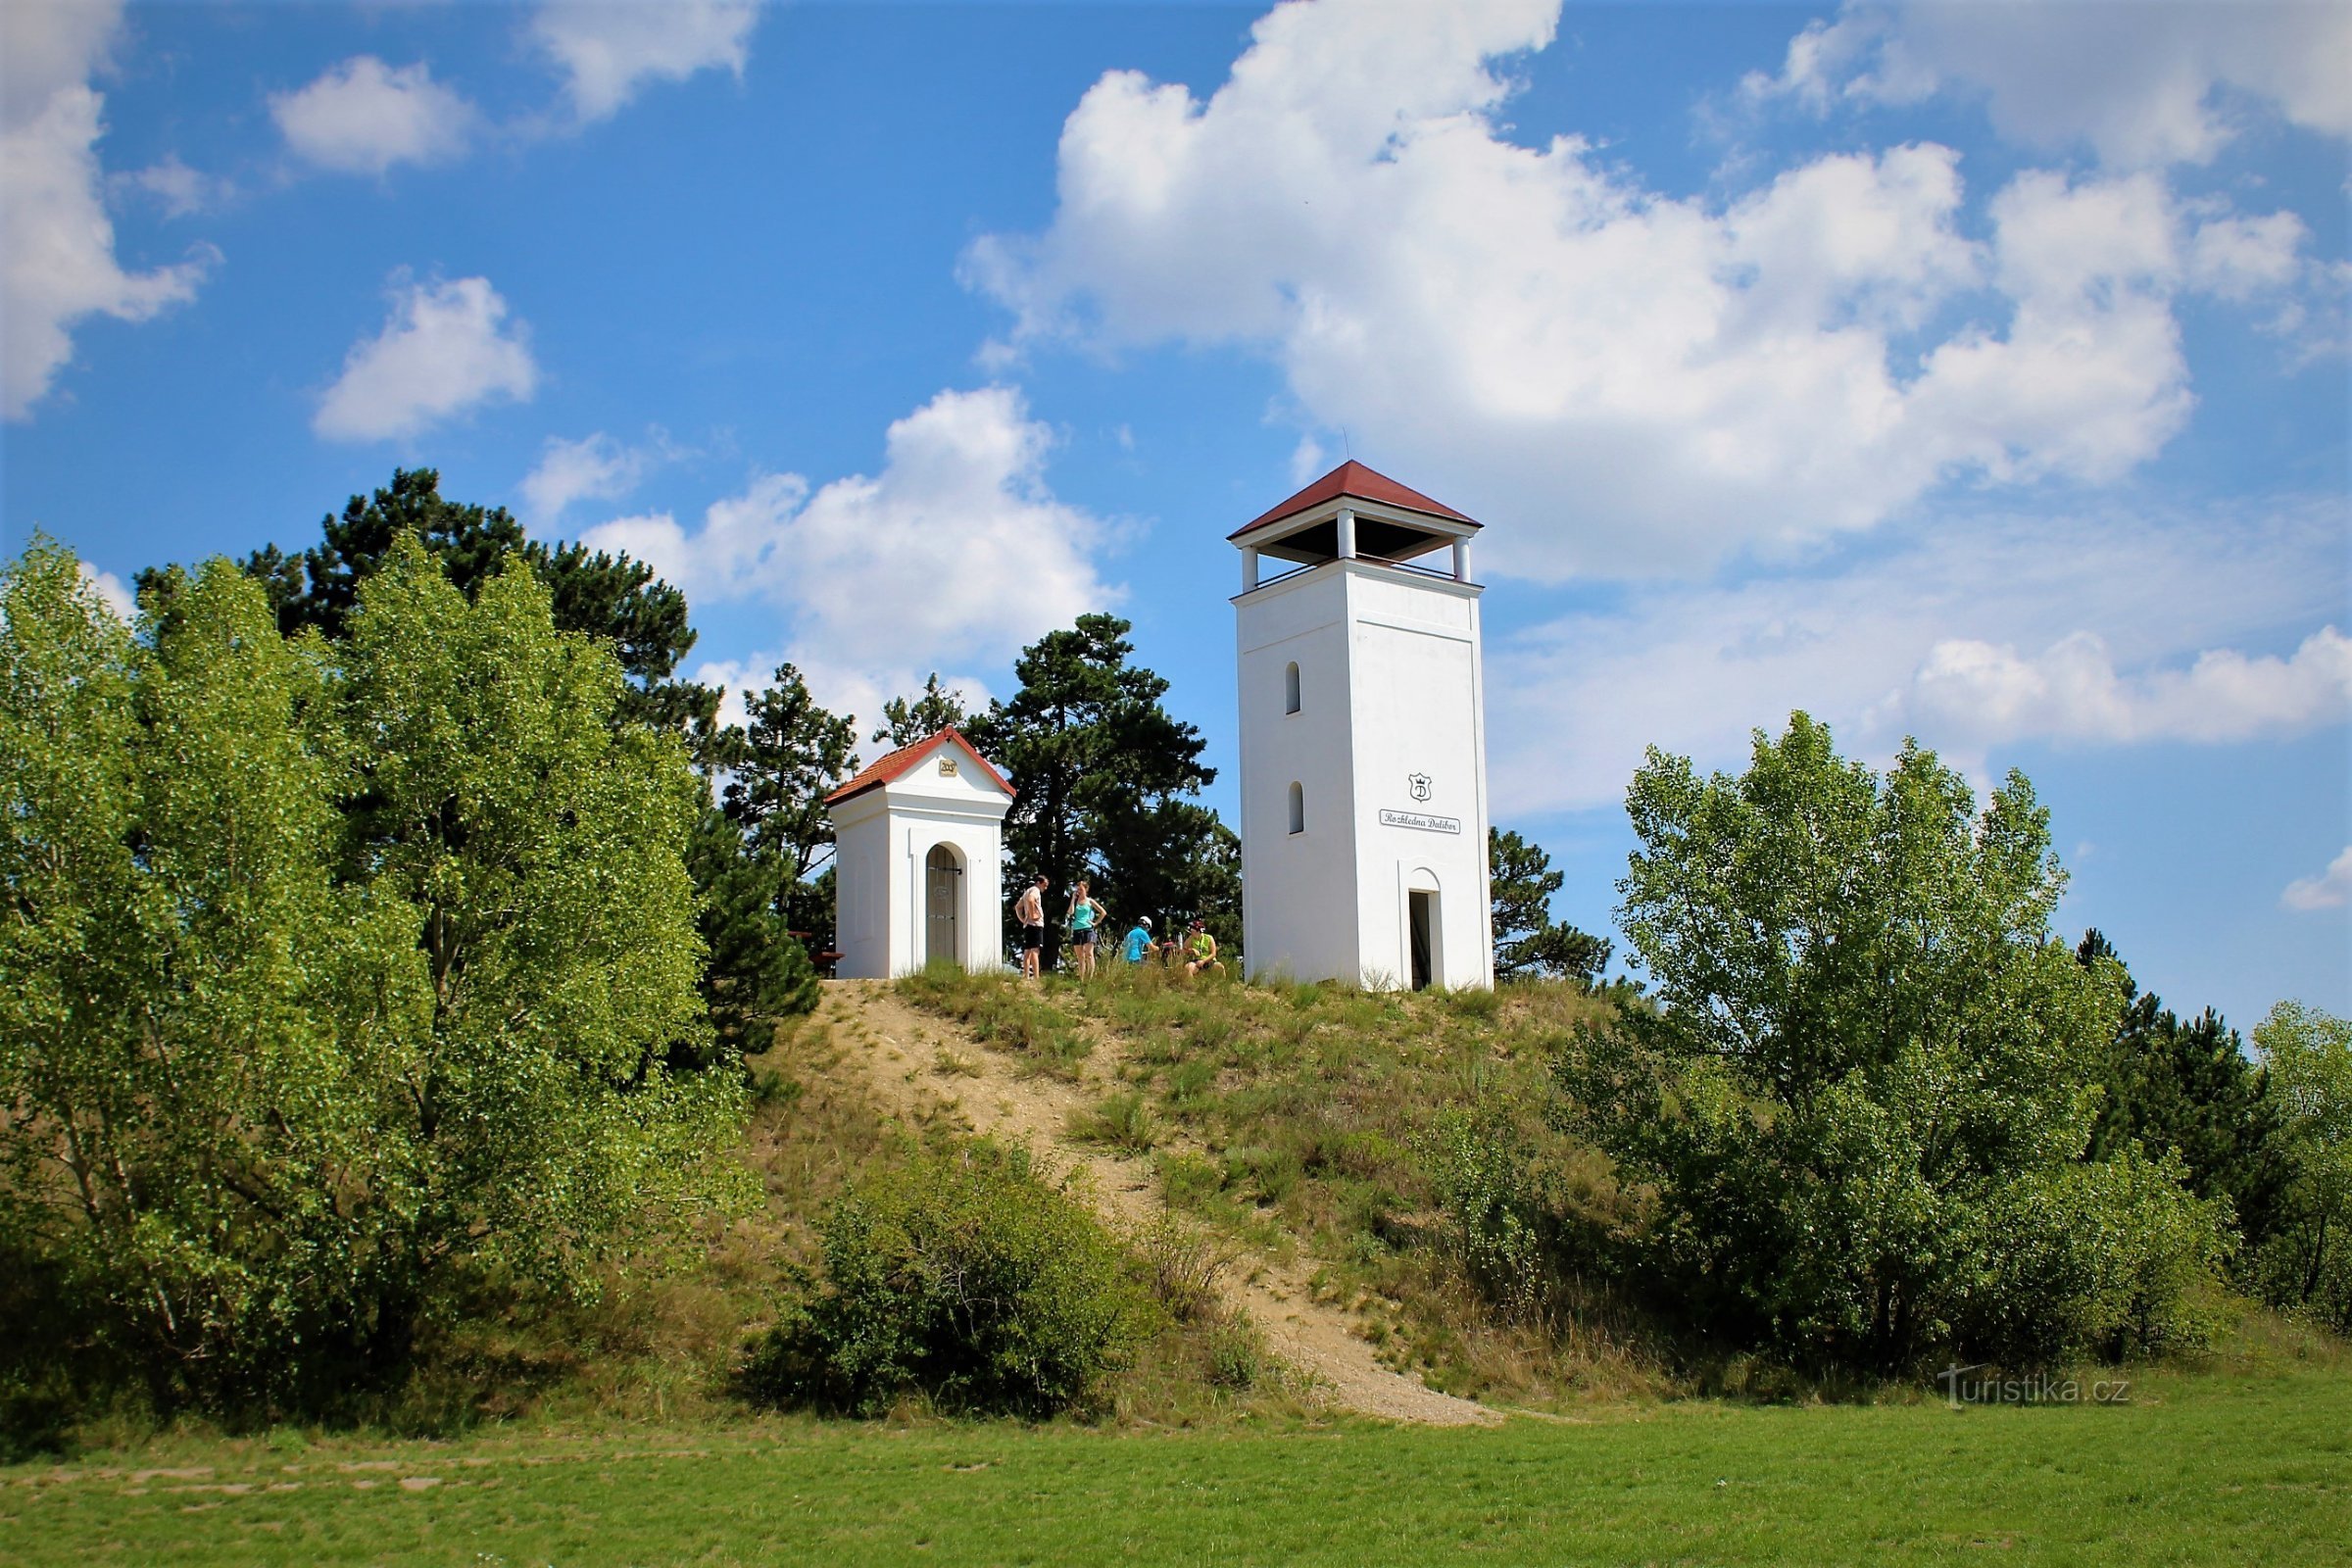 Dalibor lookout tower